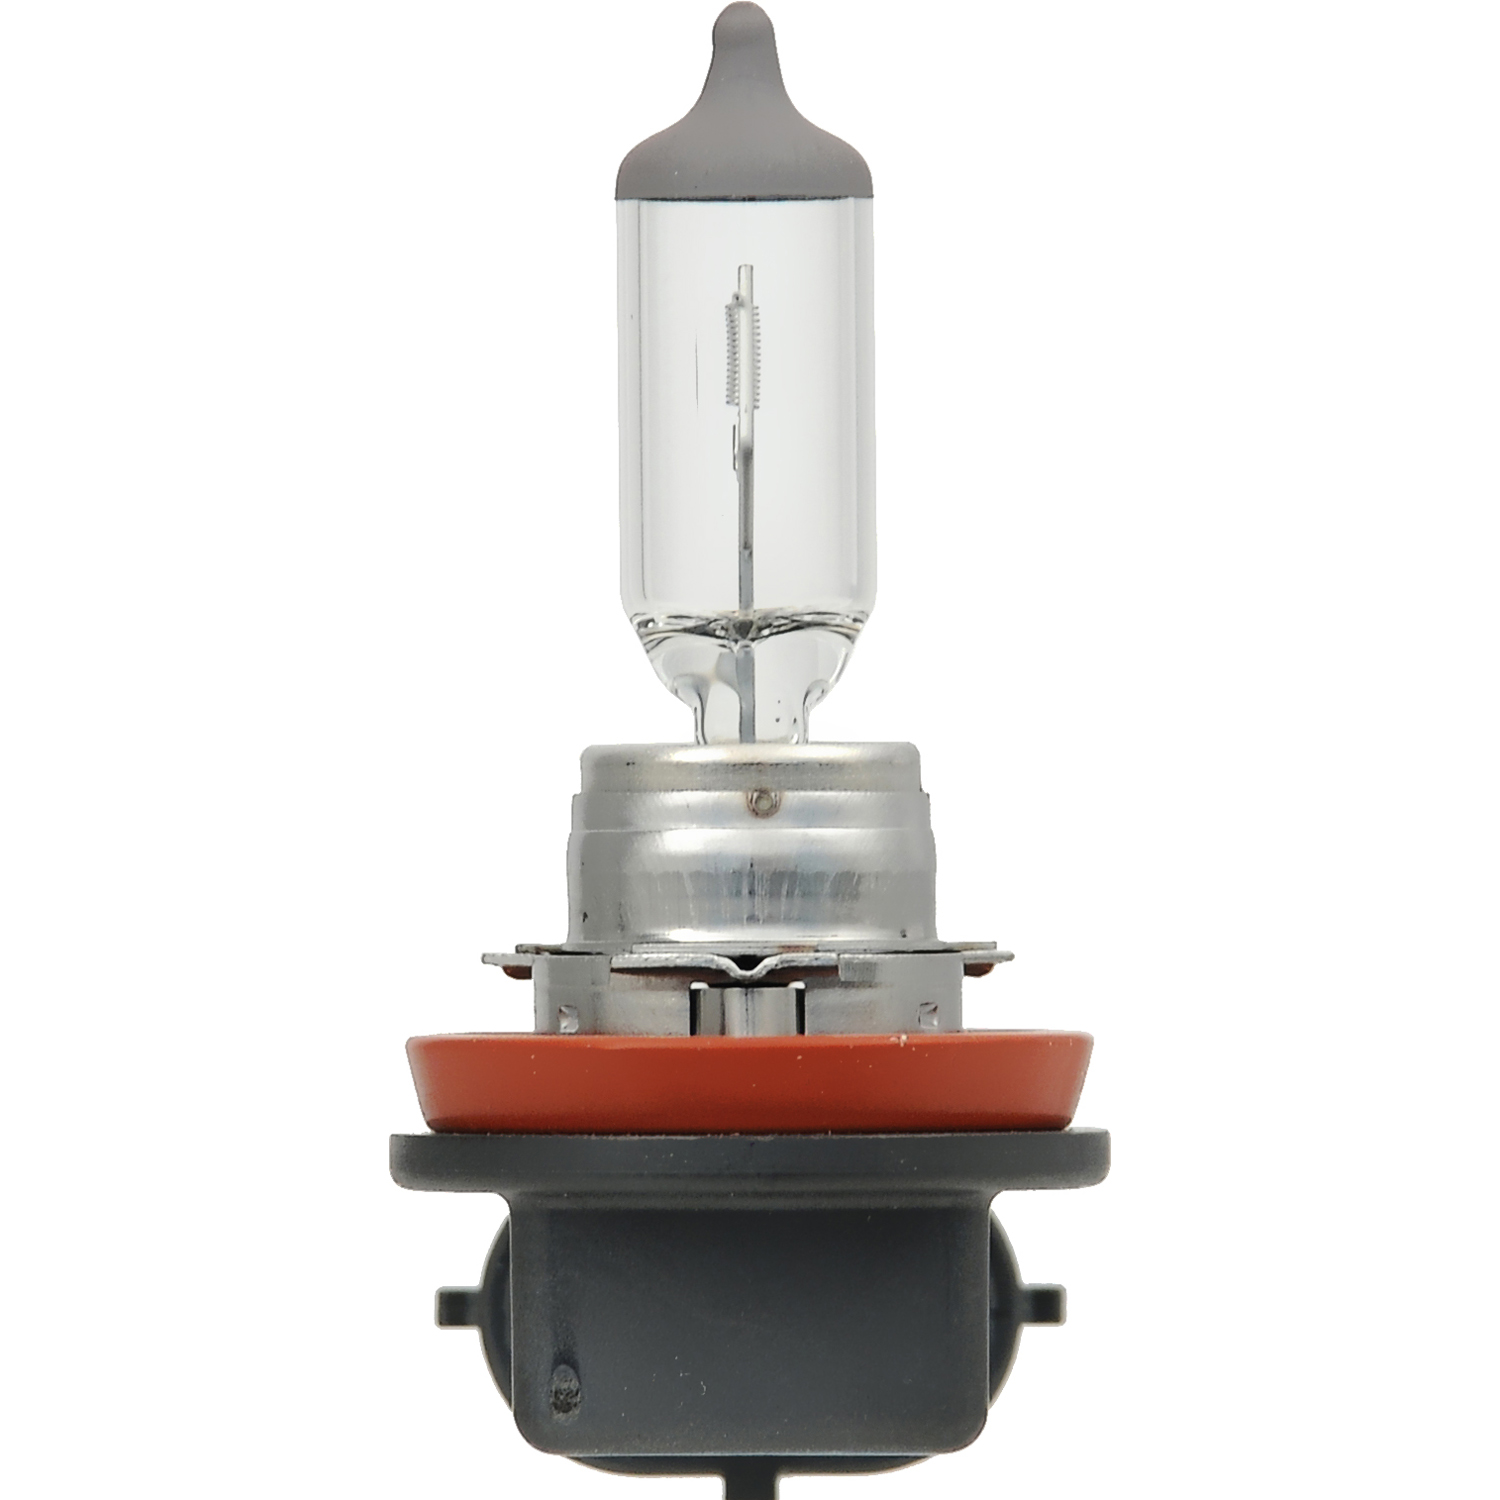 SYLVANIA RETAIL PACKS - Box Headlight Bulb - SYR H11.BX